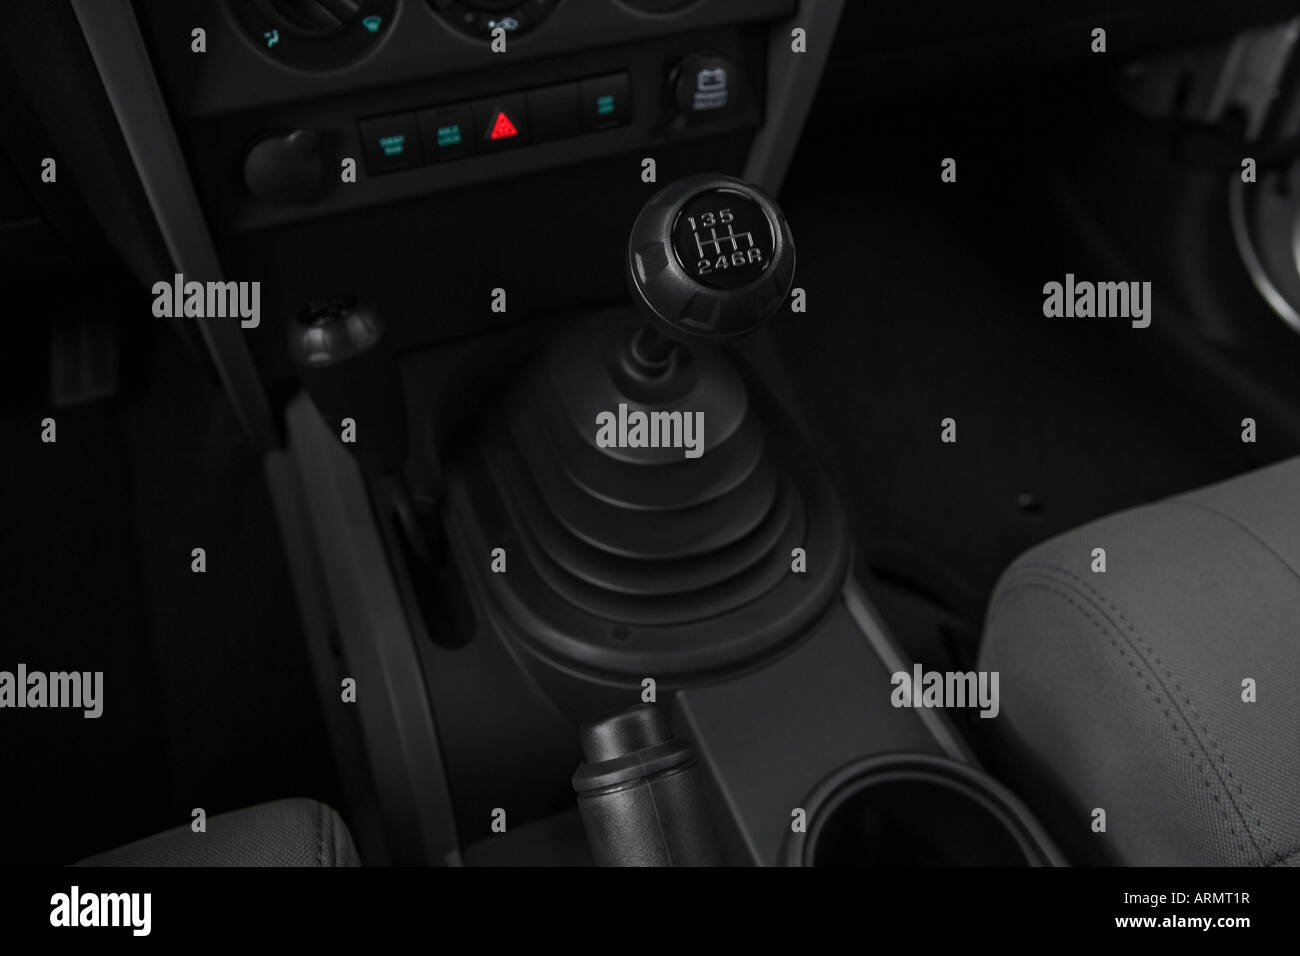 2008 Jeep Wrangler Unlimited Rubicon in Silver - Gear shifter/center  console Stock Photo - Alamy